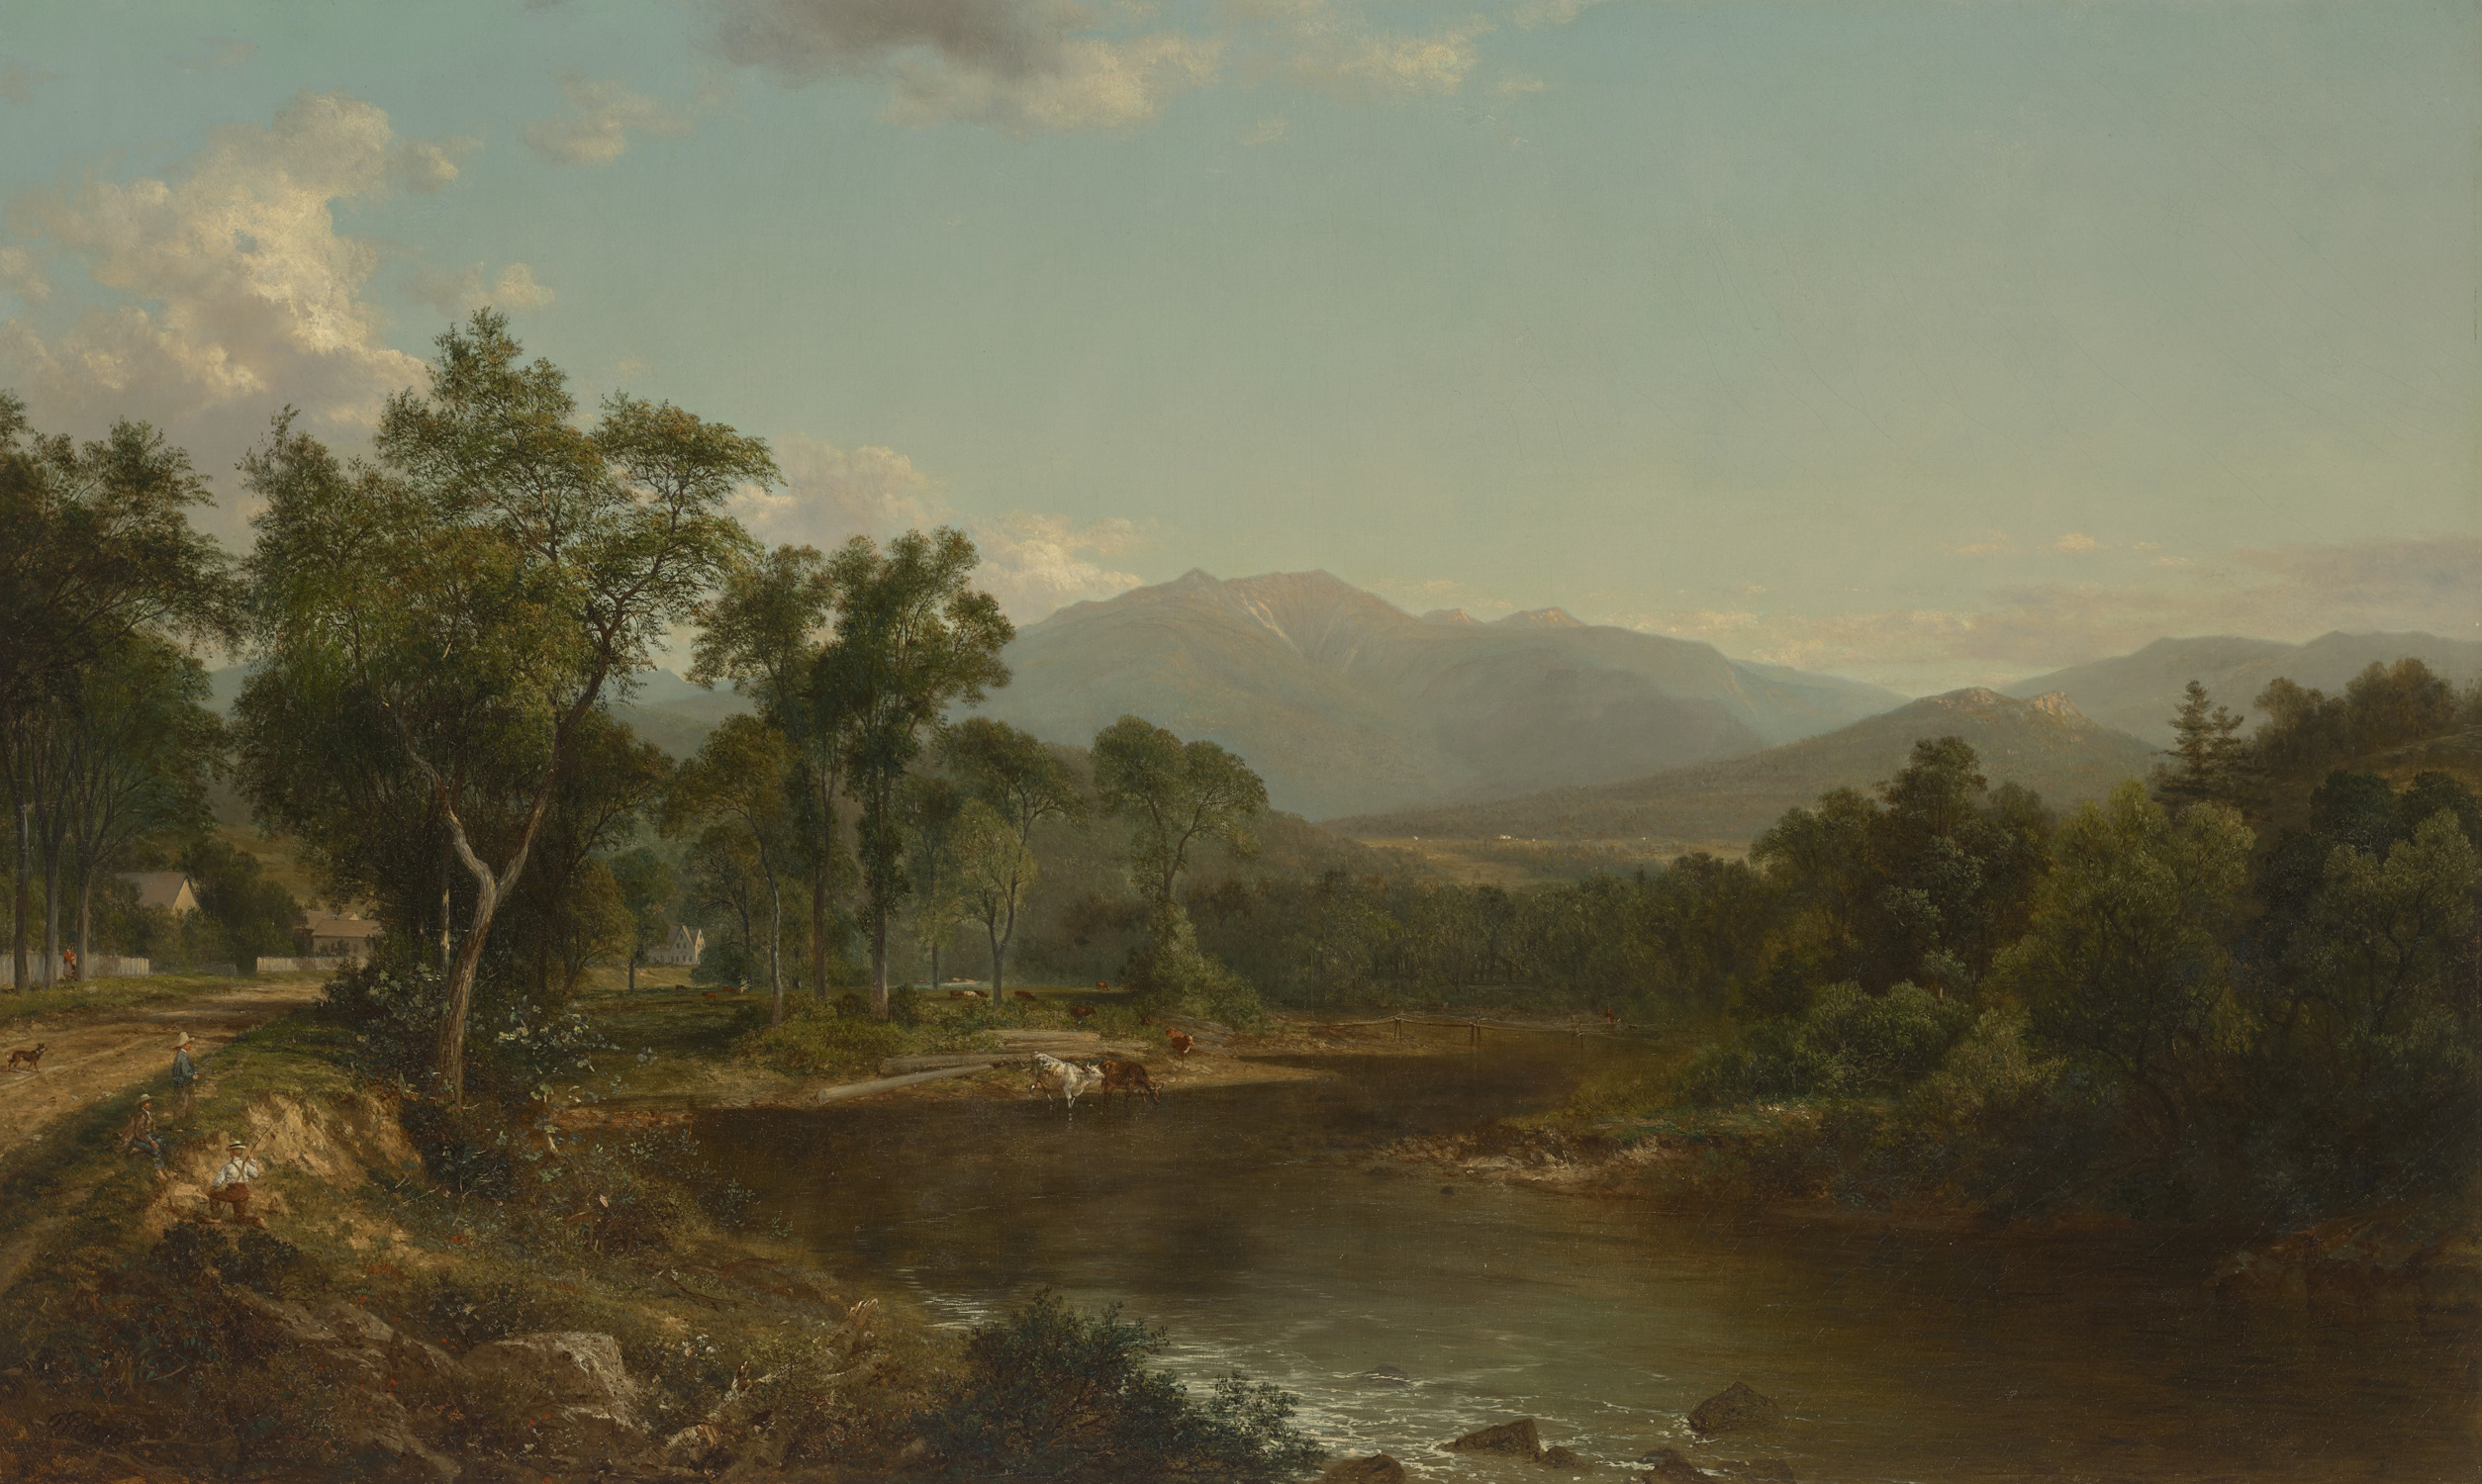 a river landscape - David Johnson’s Mount Lafayette from Franconia, New Hampshire - - American Art